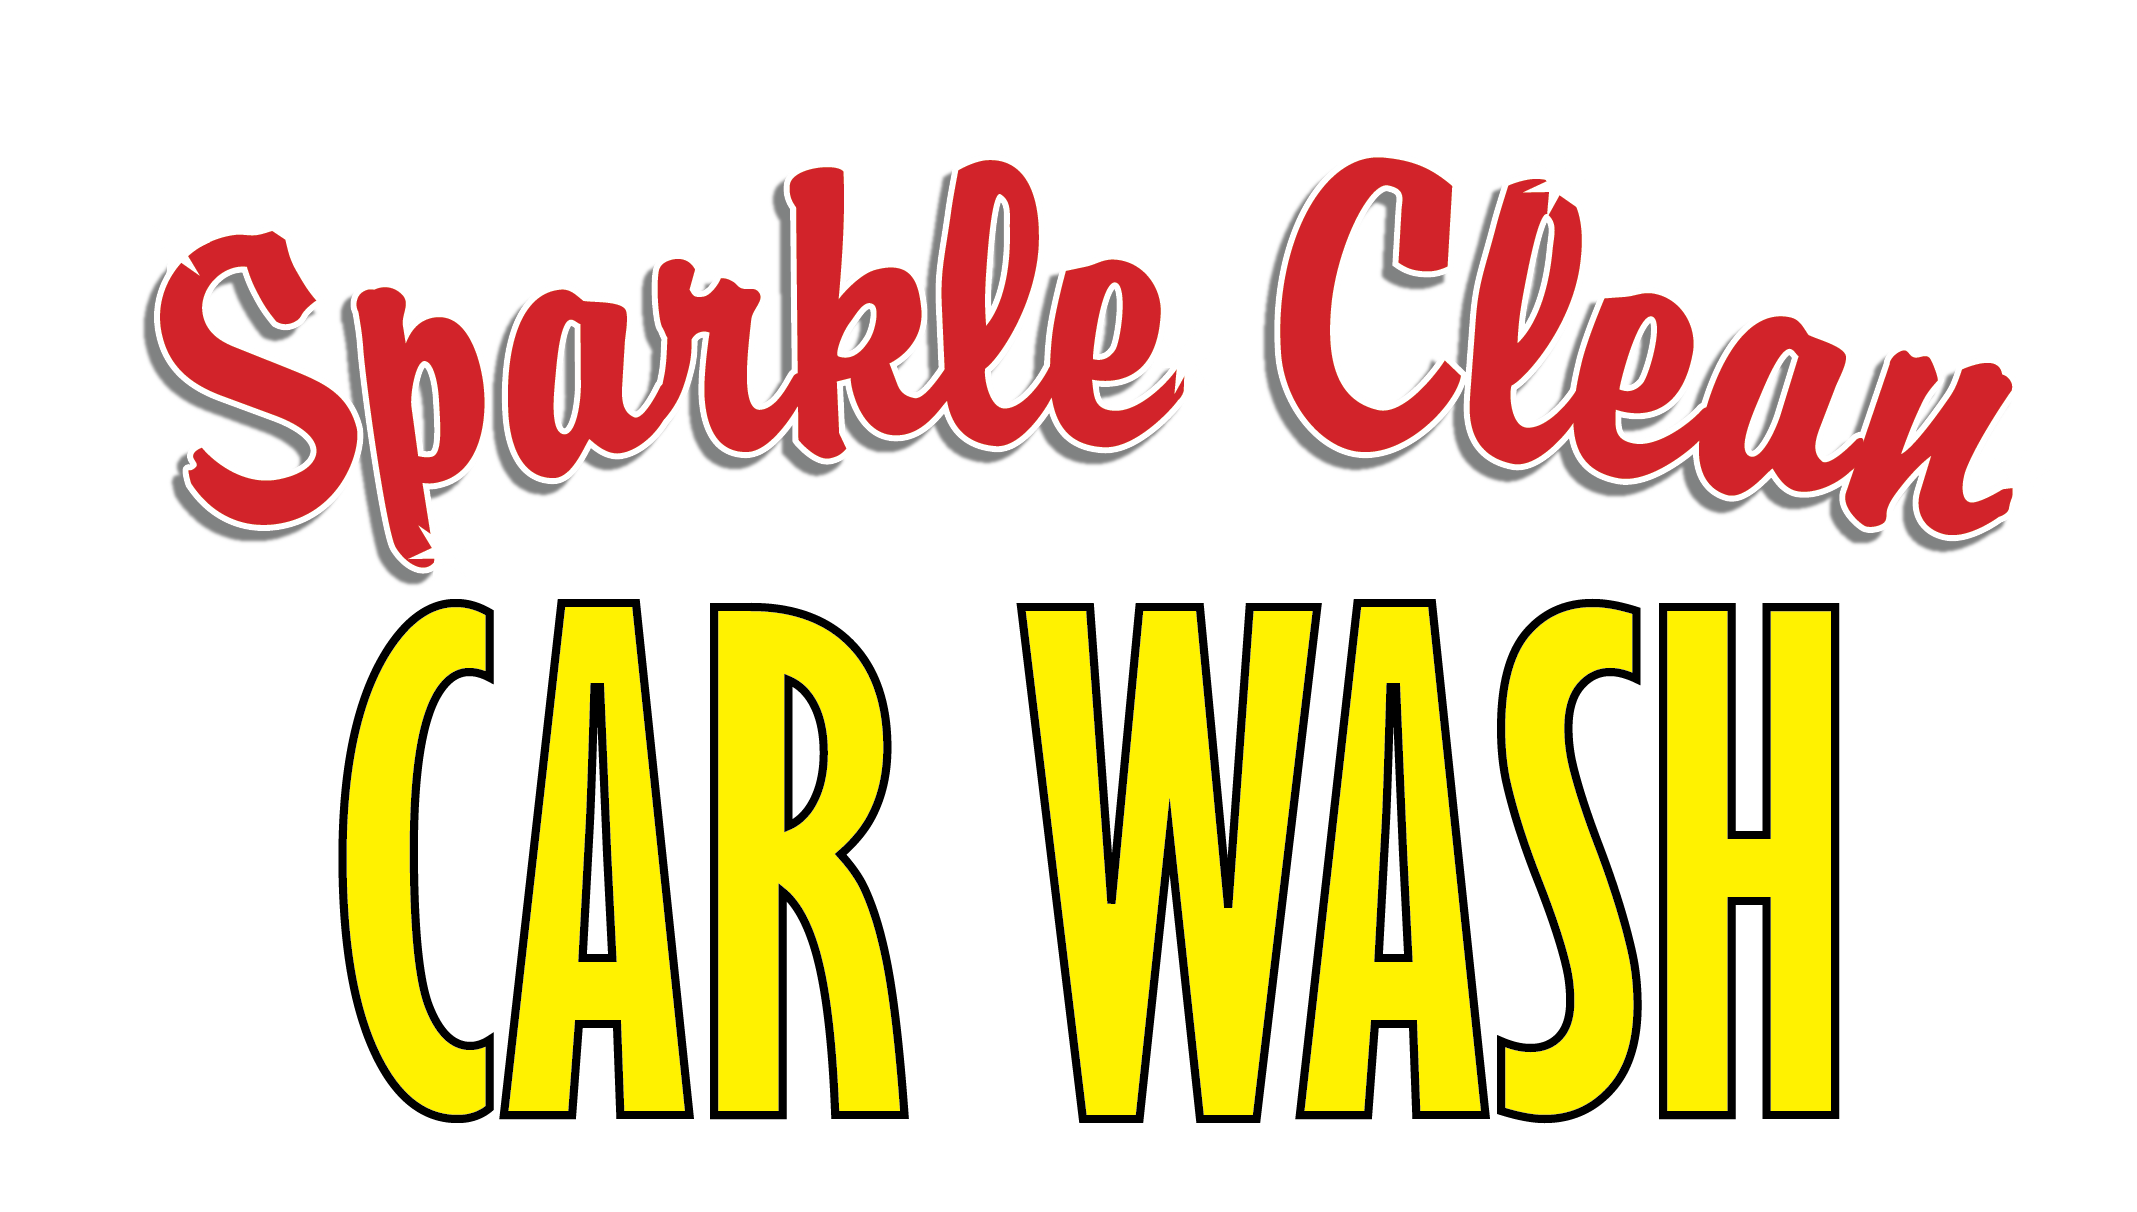 Sparkling Clean Car Wash: Darren's tricks to a perfect wash